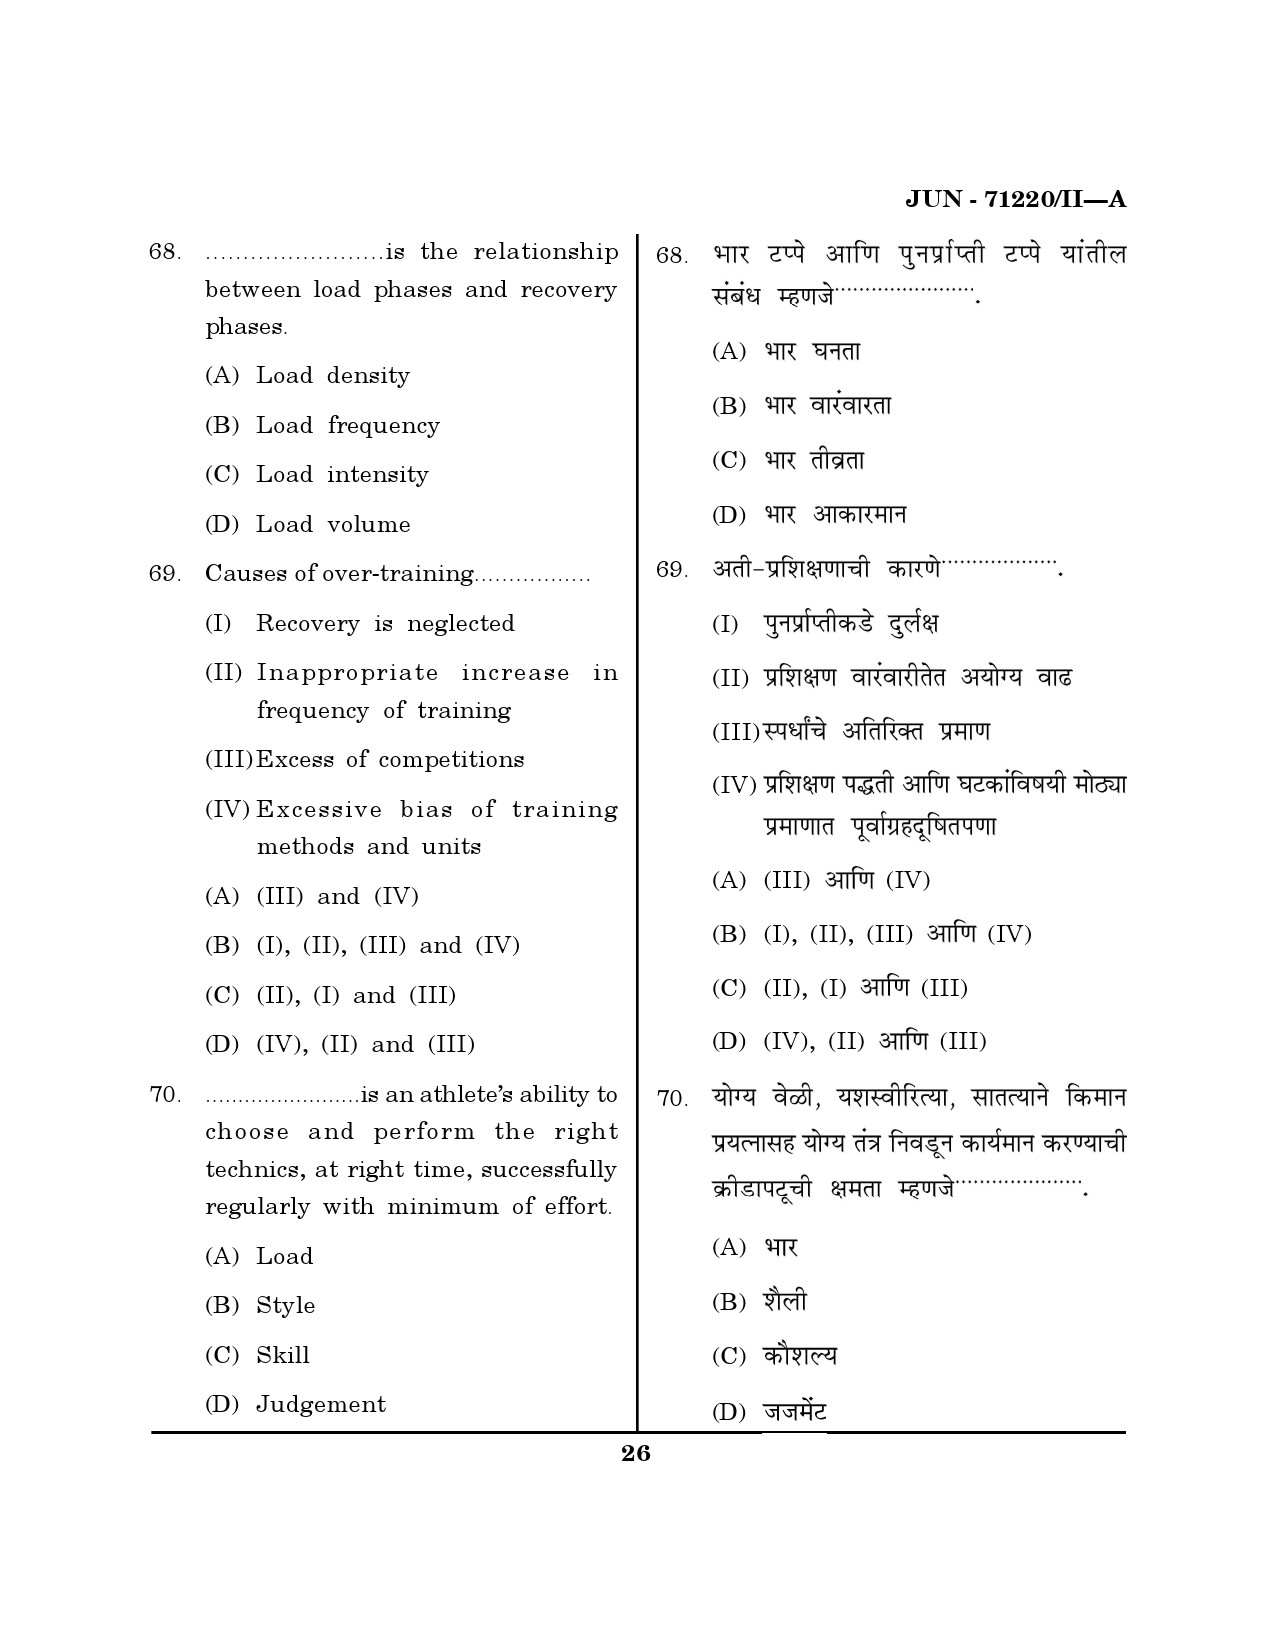 Maharashtra SET Physical Education Question Paper II June 2020 25